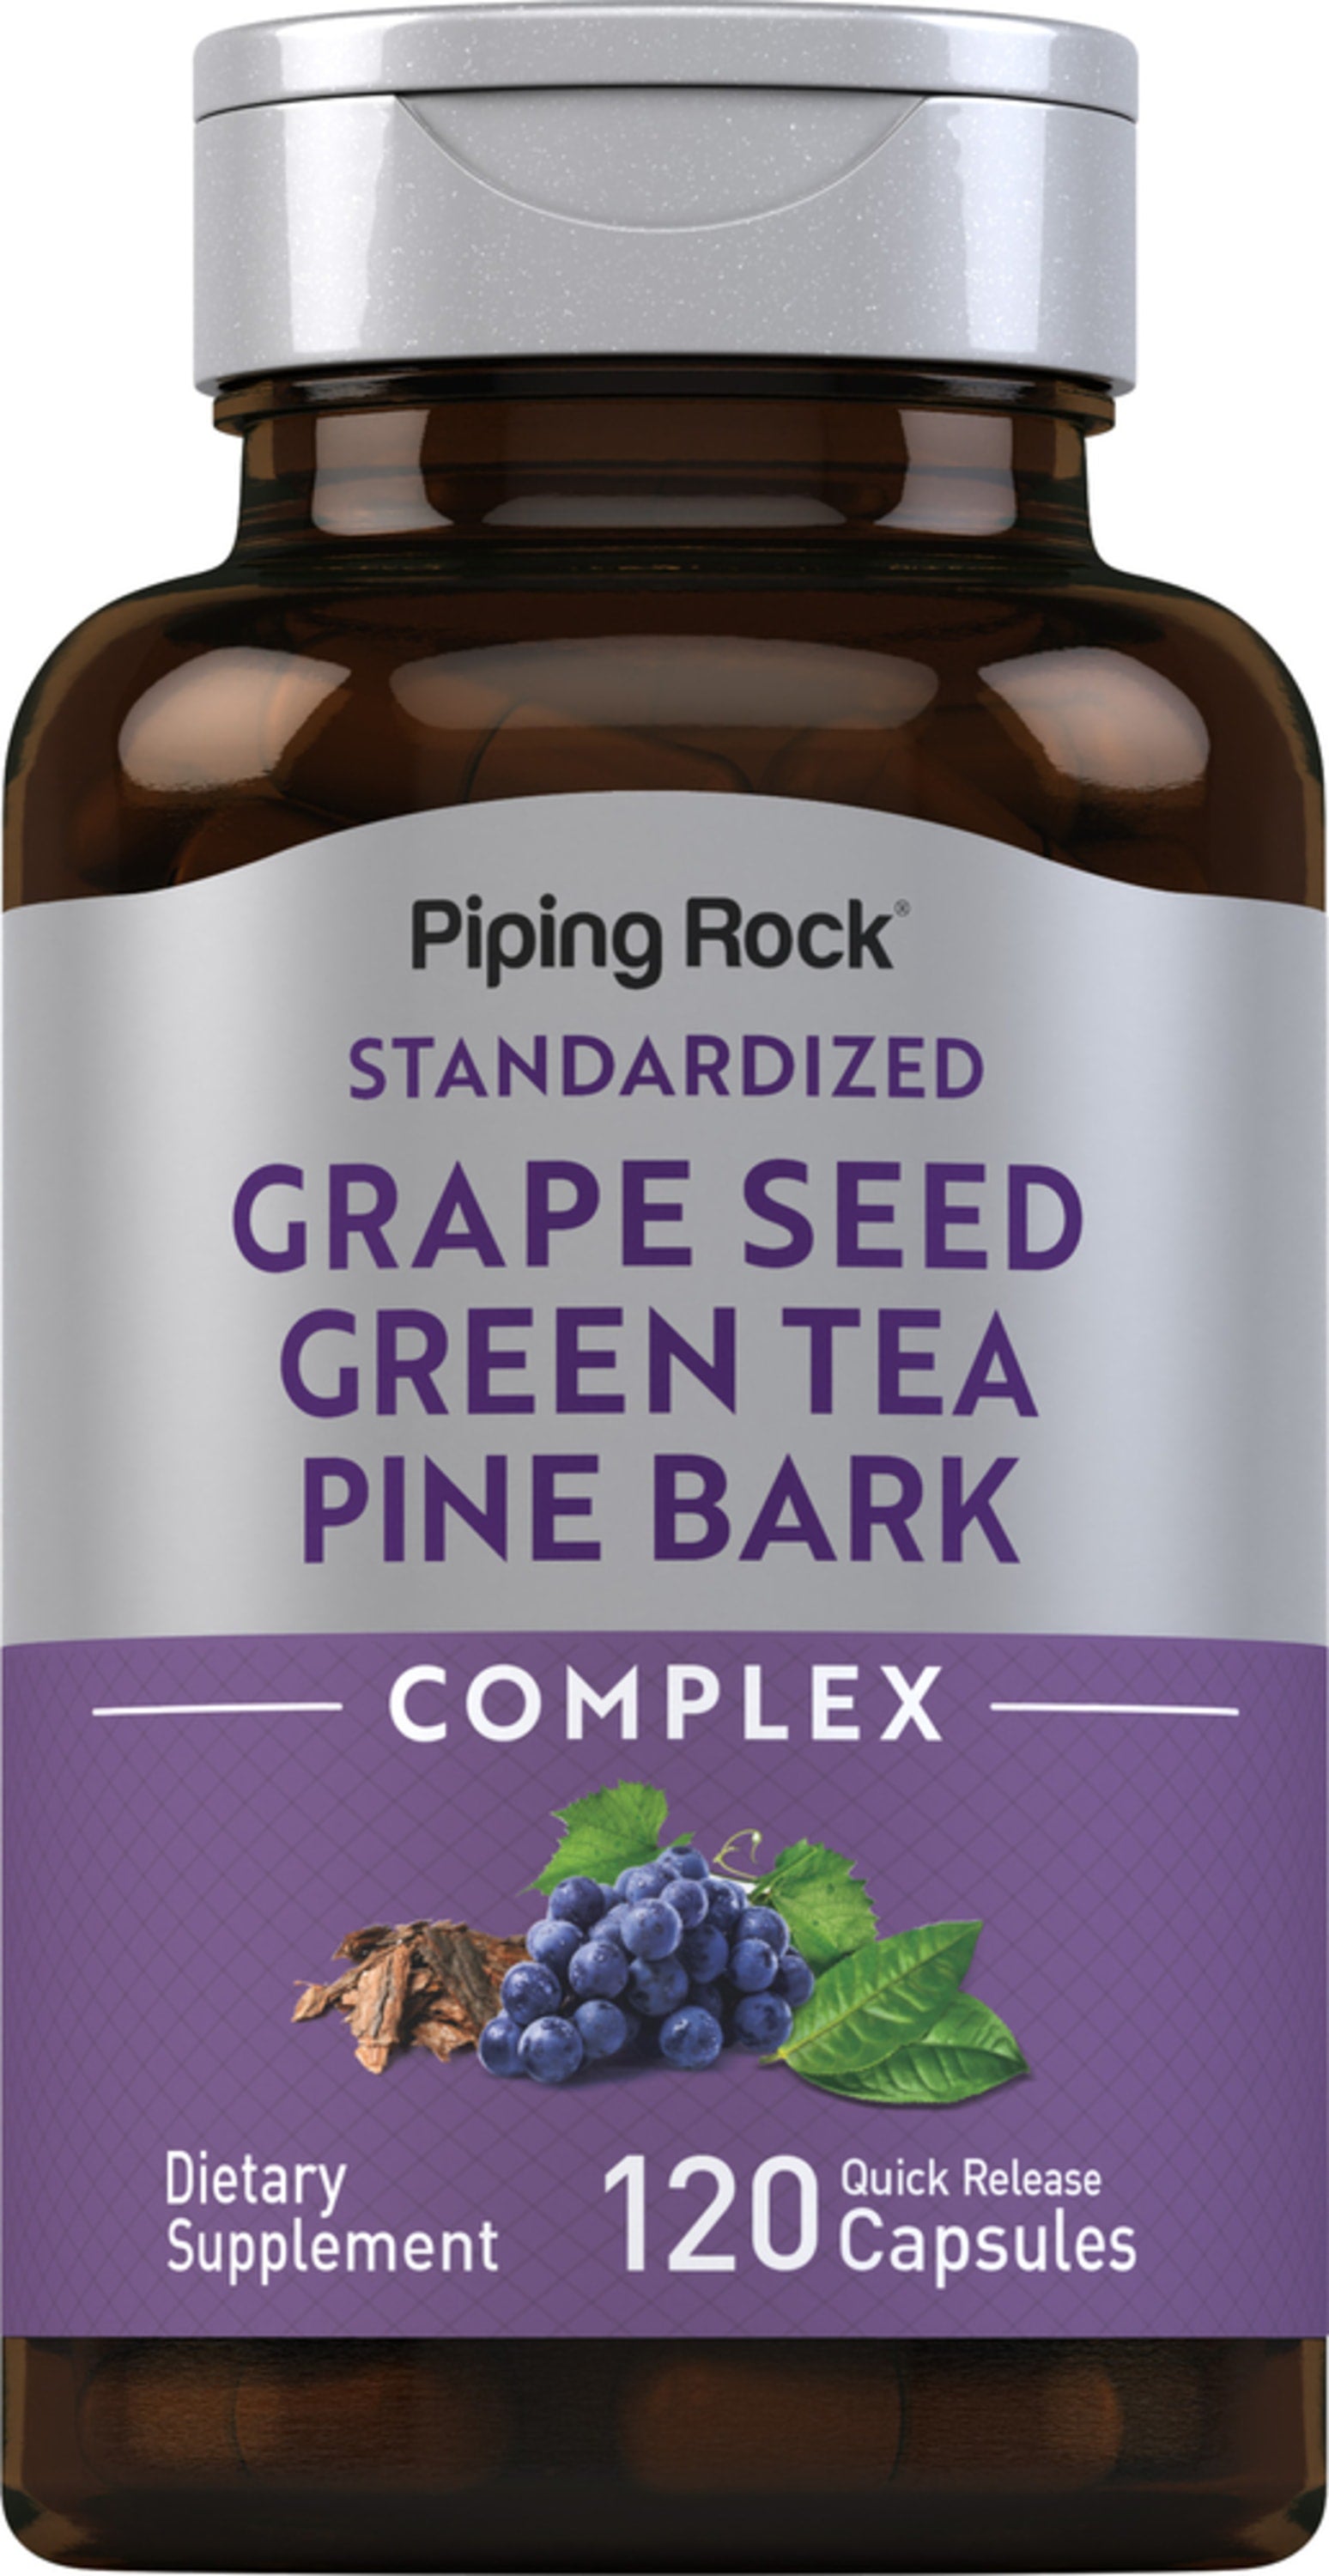 Standardized Grape seed, Green Tea & Pine Bark Complex, 120 Quick Release  Capsules